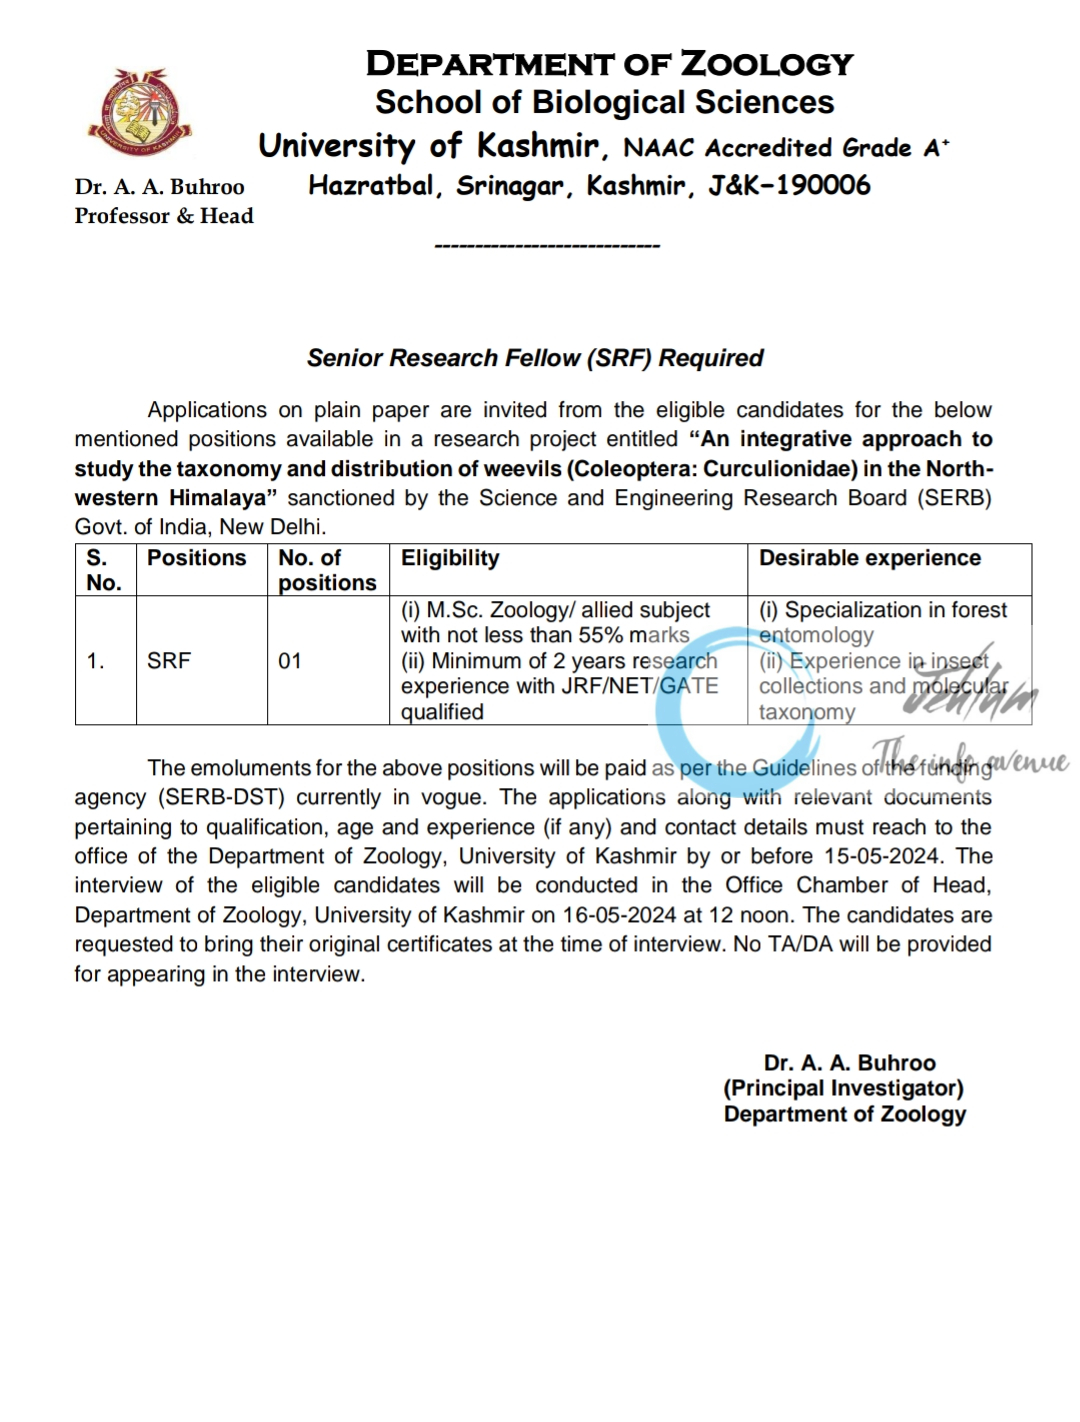 University of Kashmir Deptt of Zoology Senior Research Fellow SRF Advertisement Notice 2024